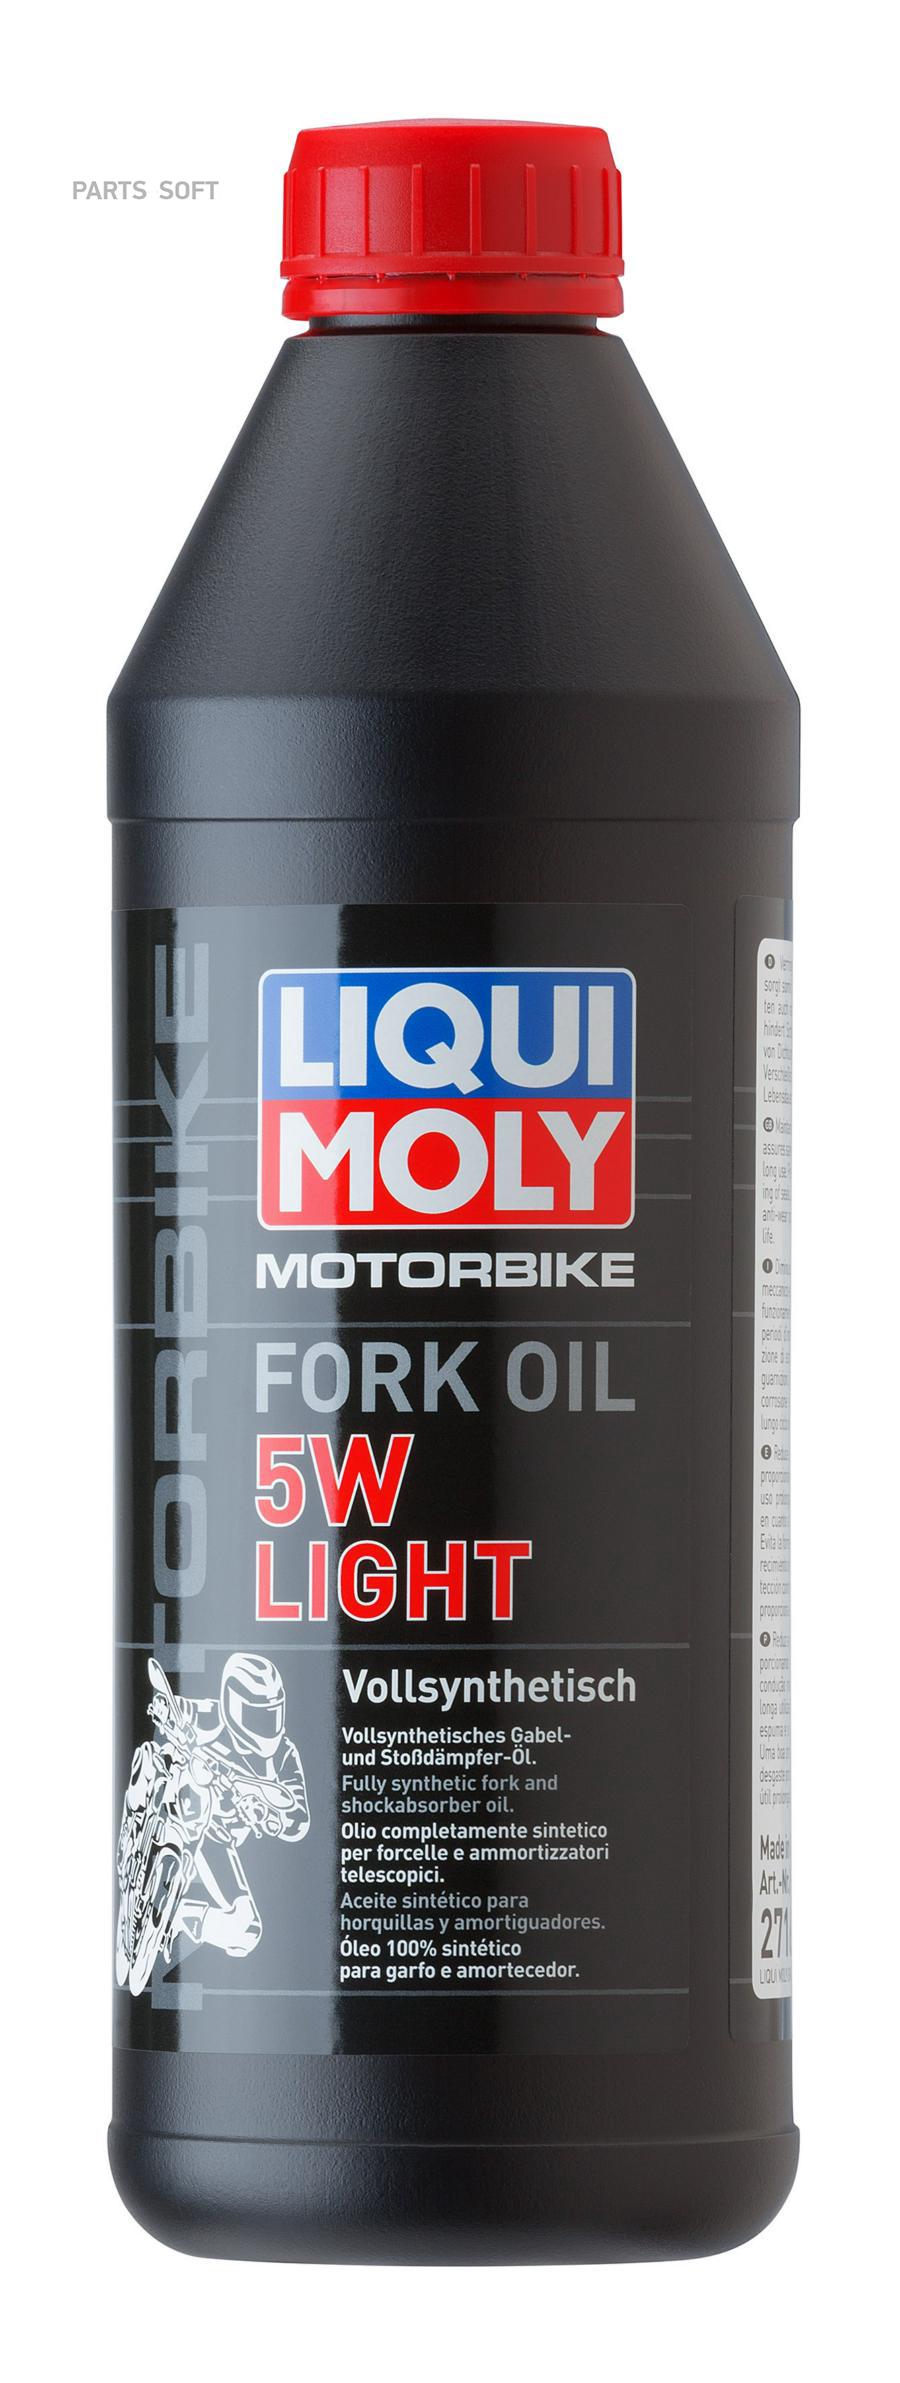 Масло синтетическое д/вилок и амортиз. motorbike fork oil light 5w 1л